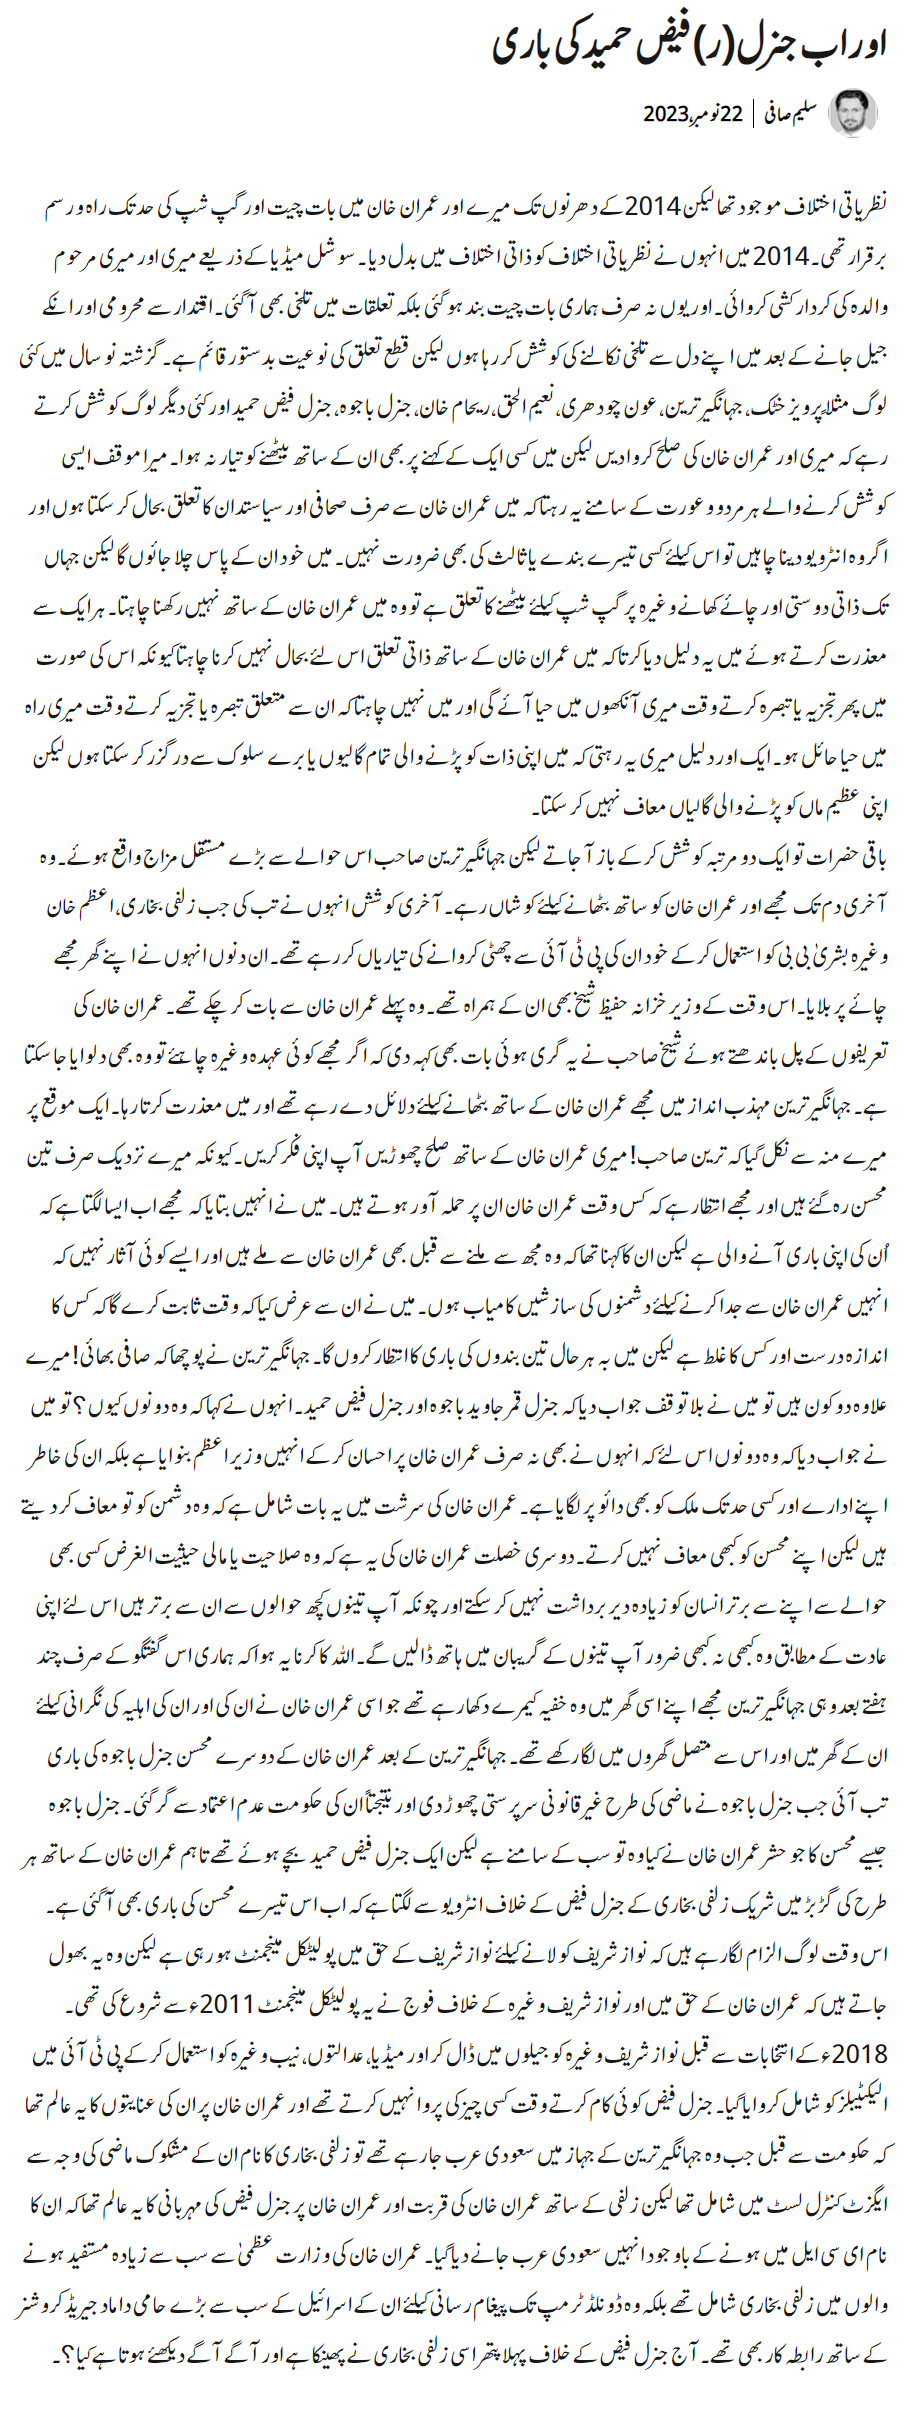 Saleem Safi Urdu Column About General(R) Faiz Hameed & Involvement in Pakistan Politics During PTI Government